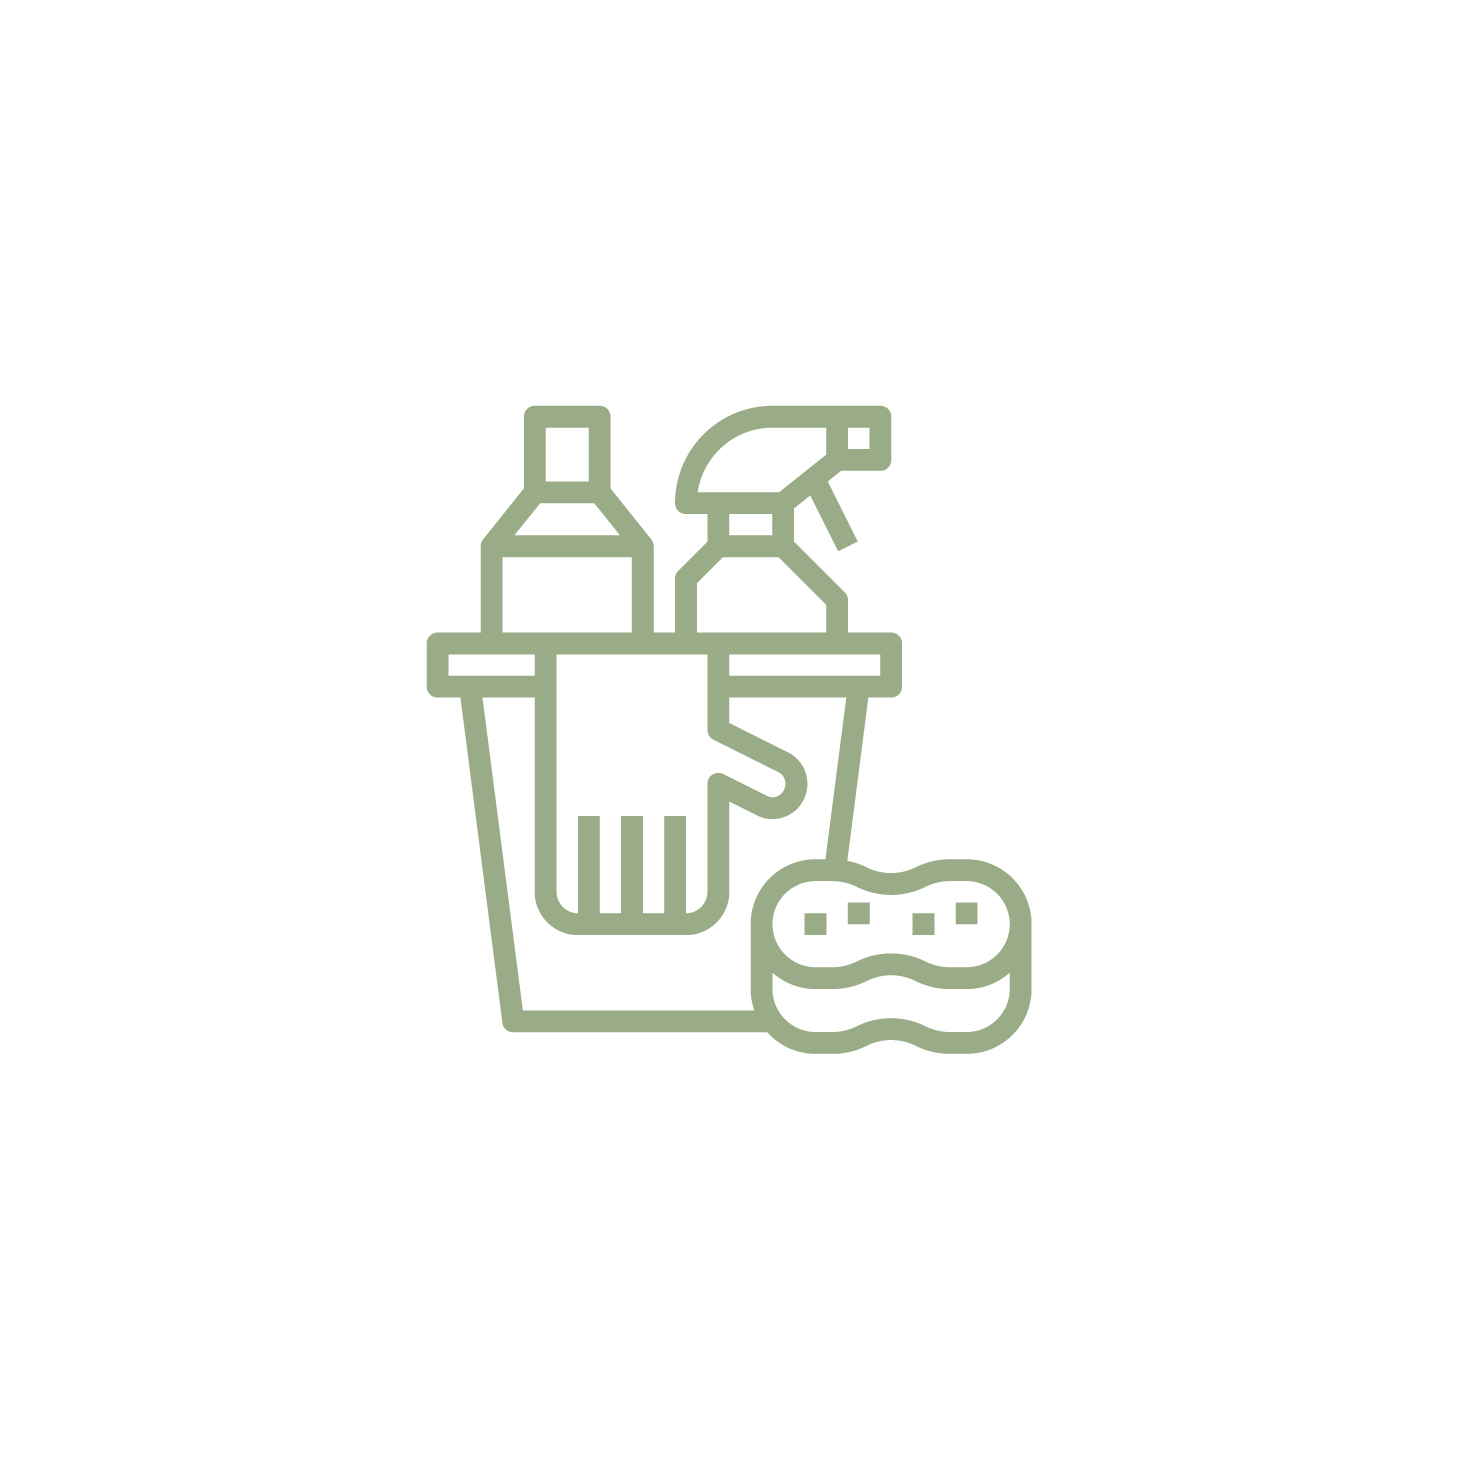 Icono que representa la limpieza diaria